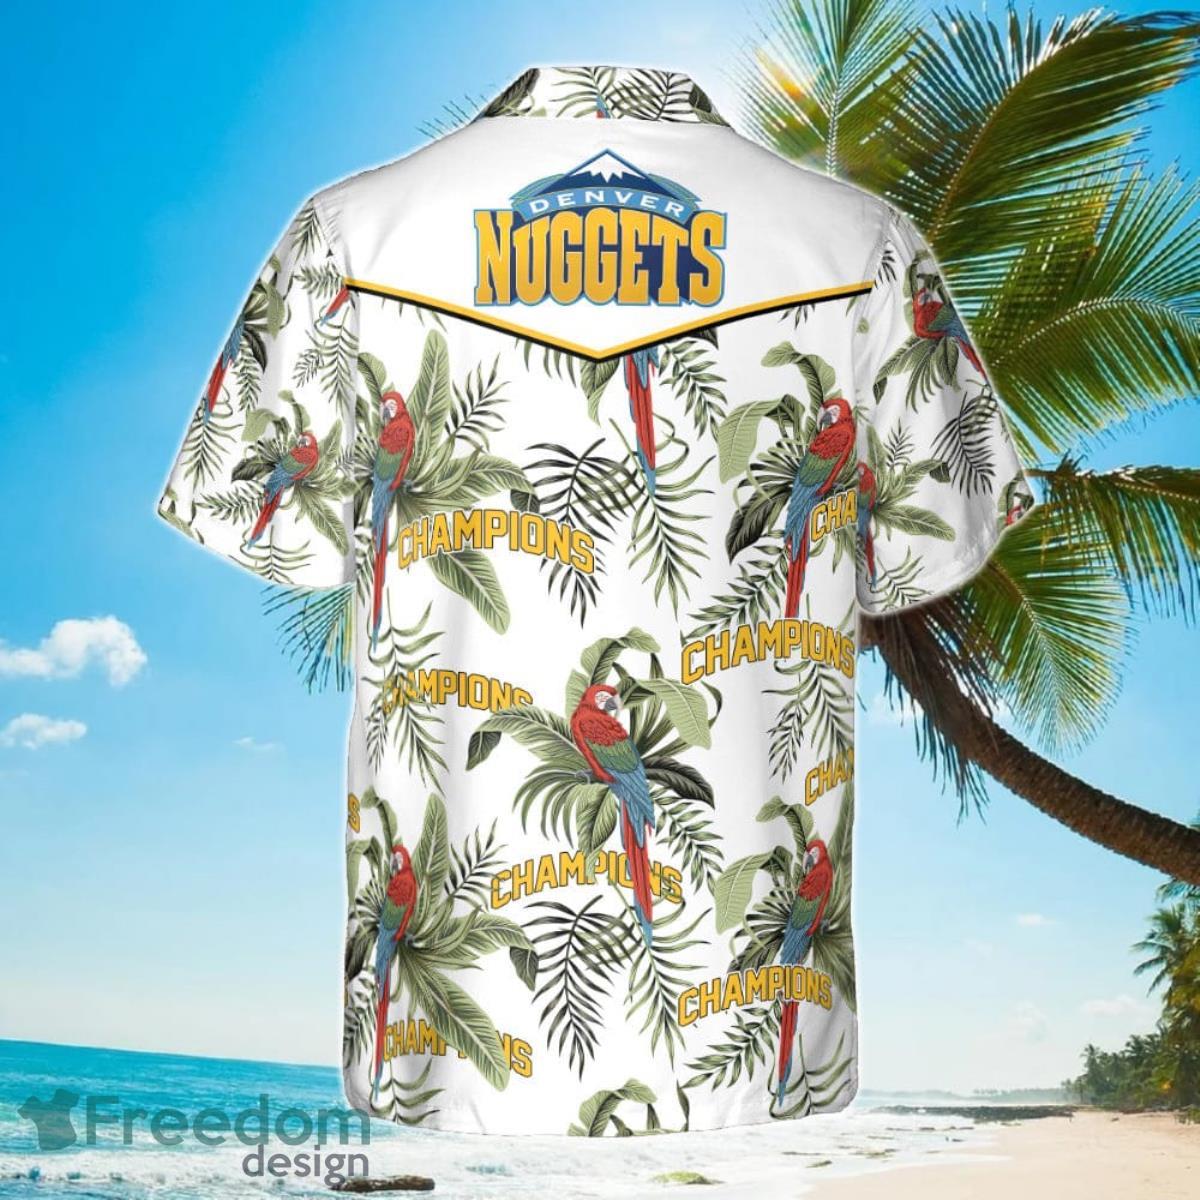 Denver Nuggets National Basketball Association 2023 Hawaiian Shirt For Fans  - Freedomdesign